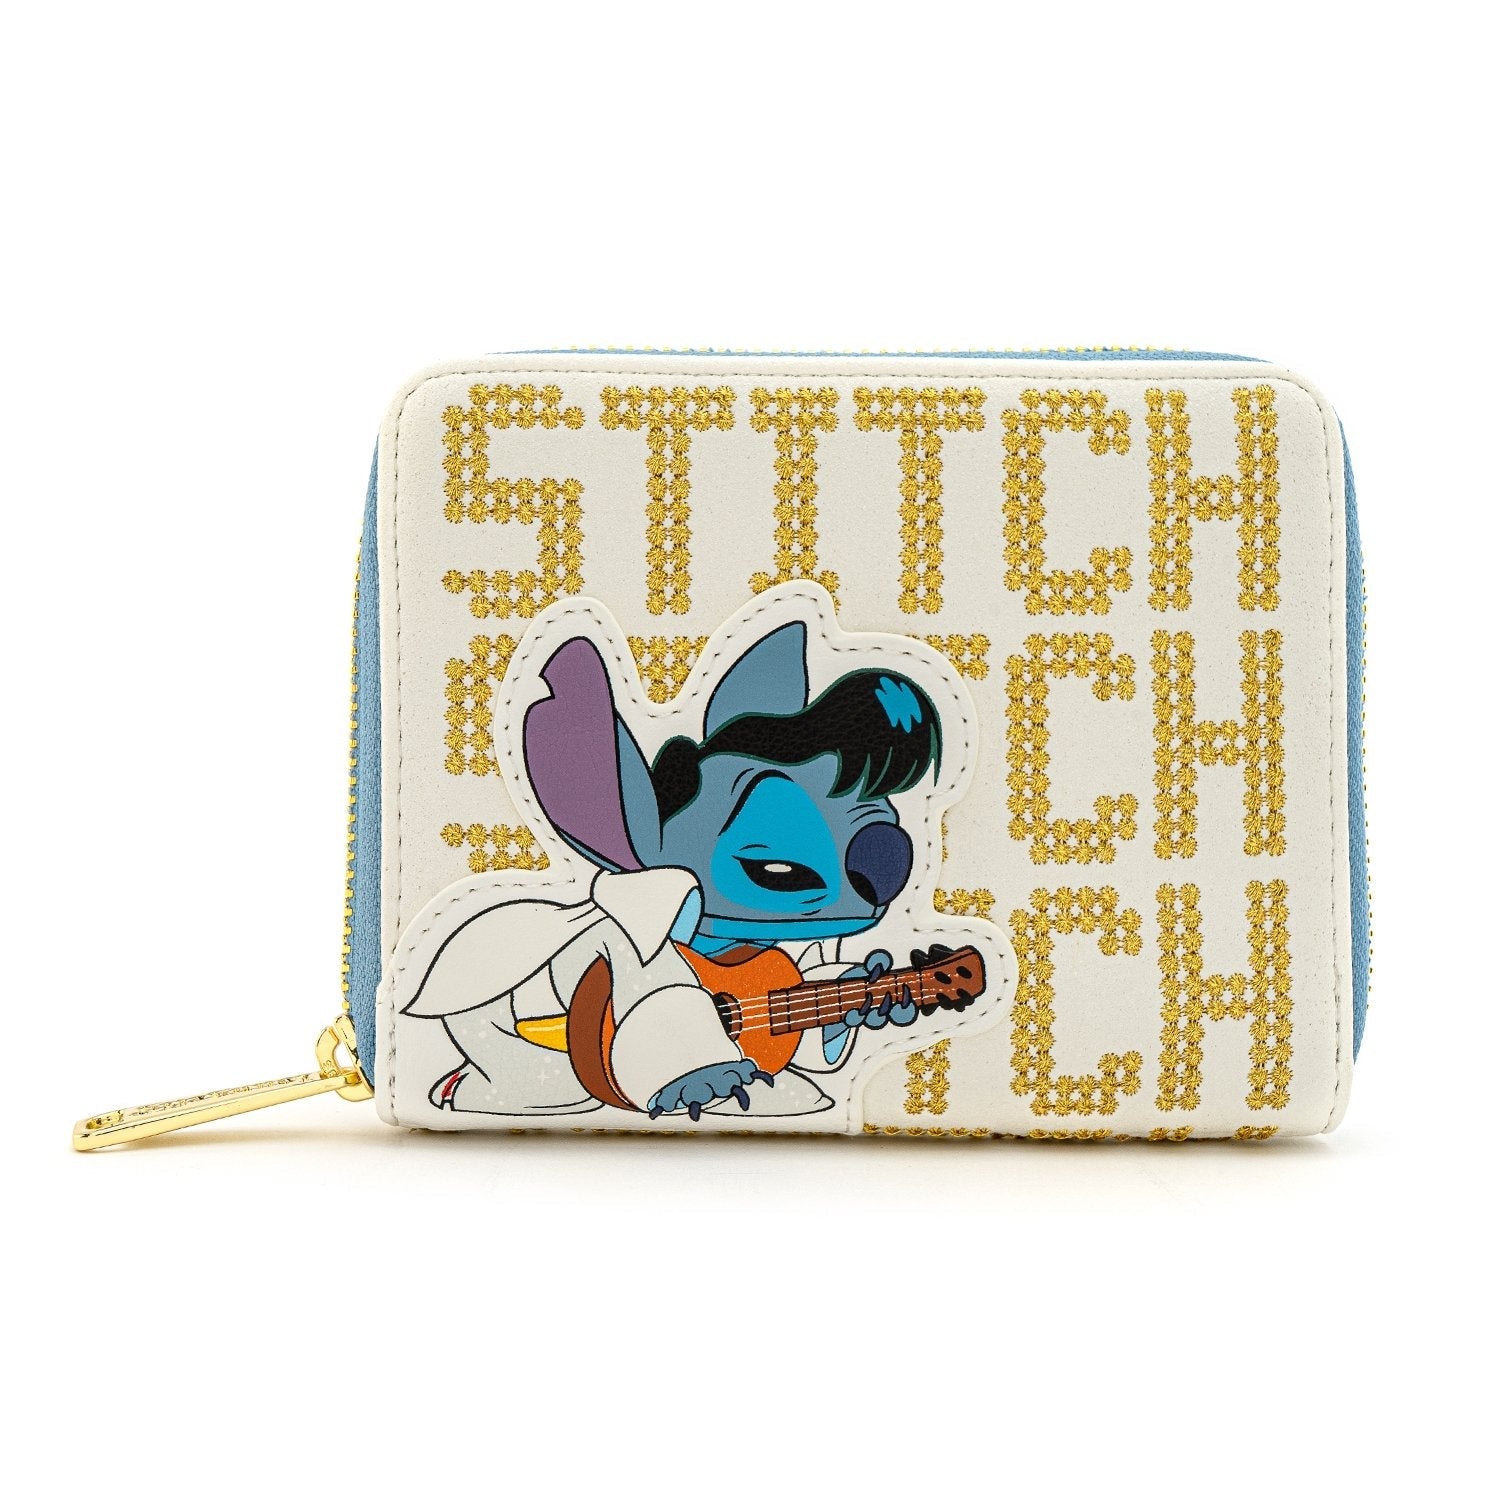 Loungefly X Disney Lilo and Stitch Elvis Stitch Purse - GeekCore